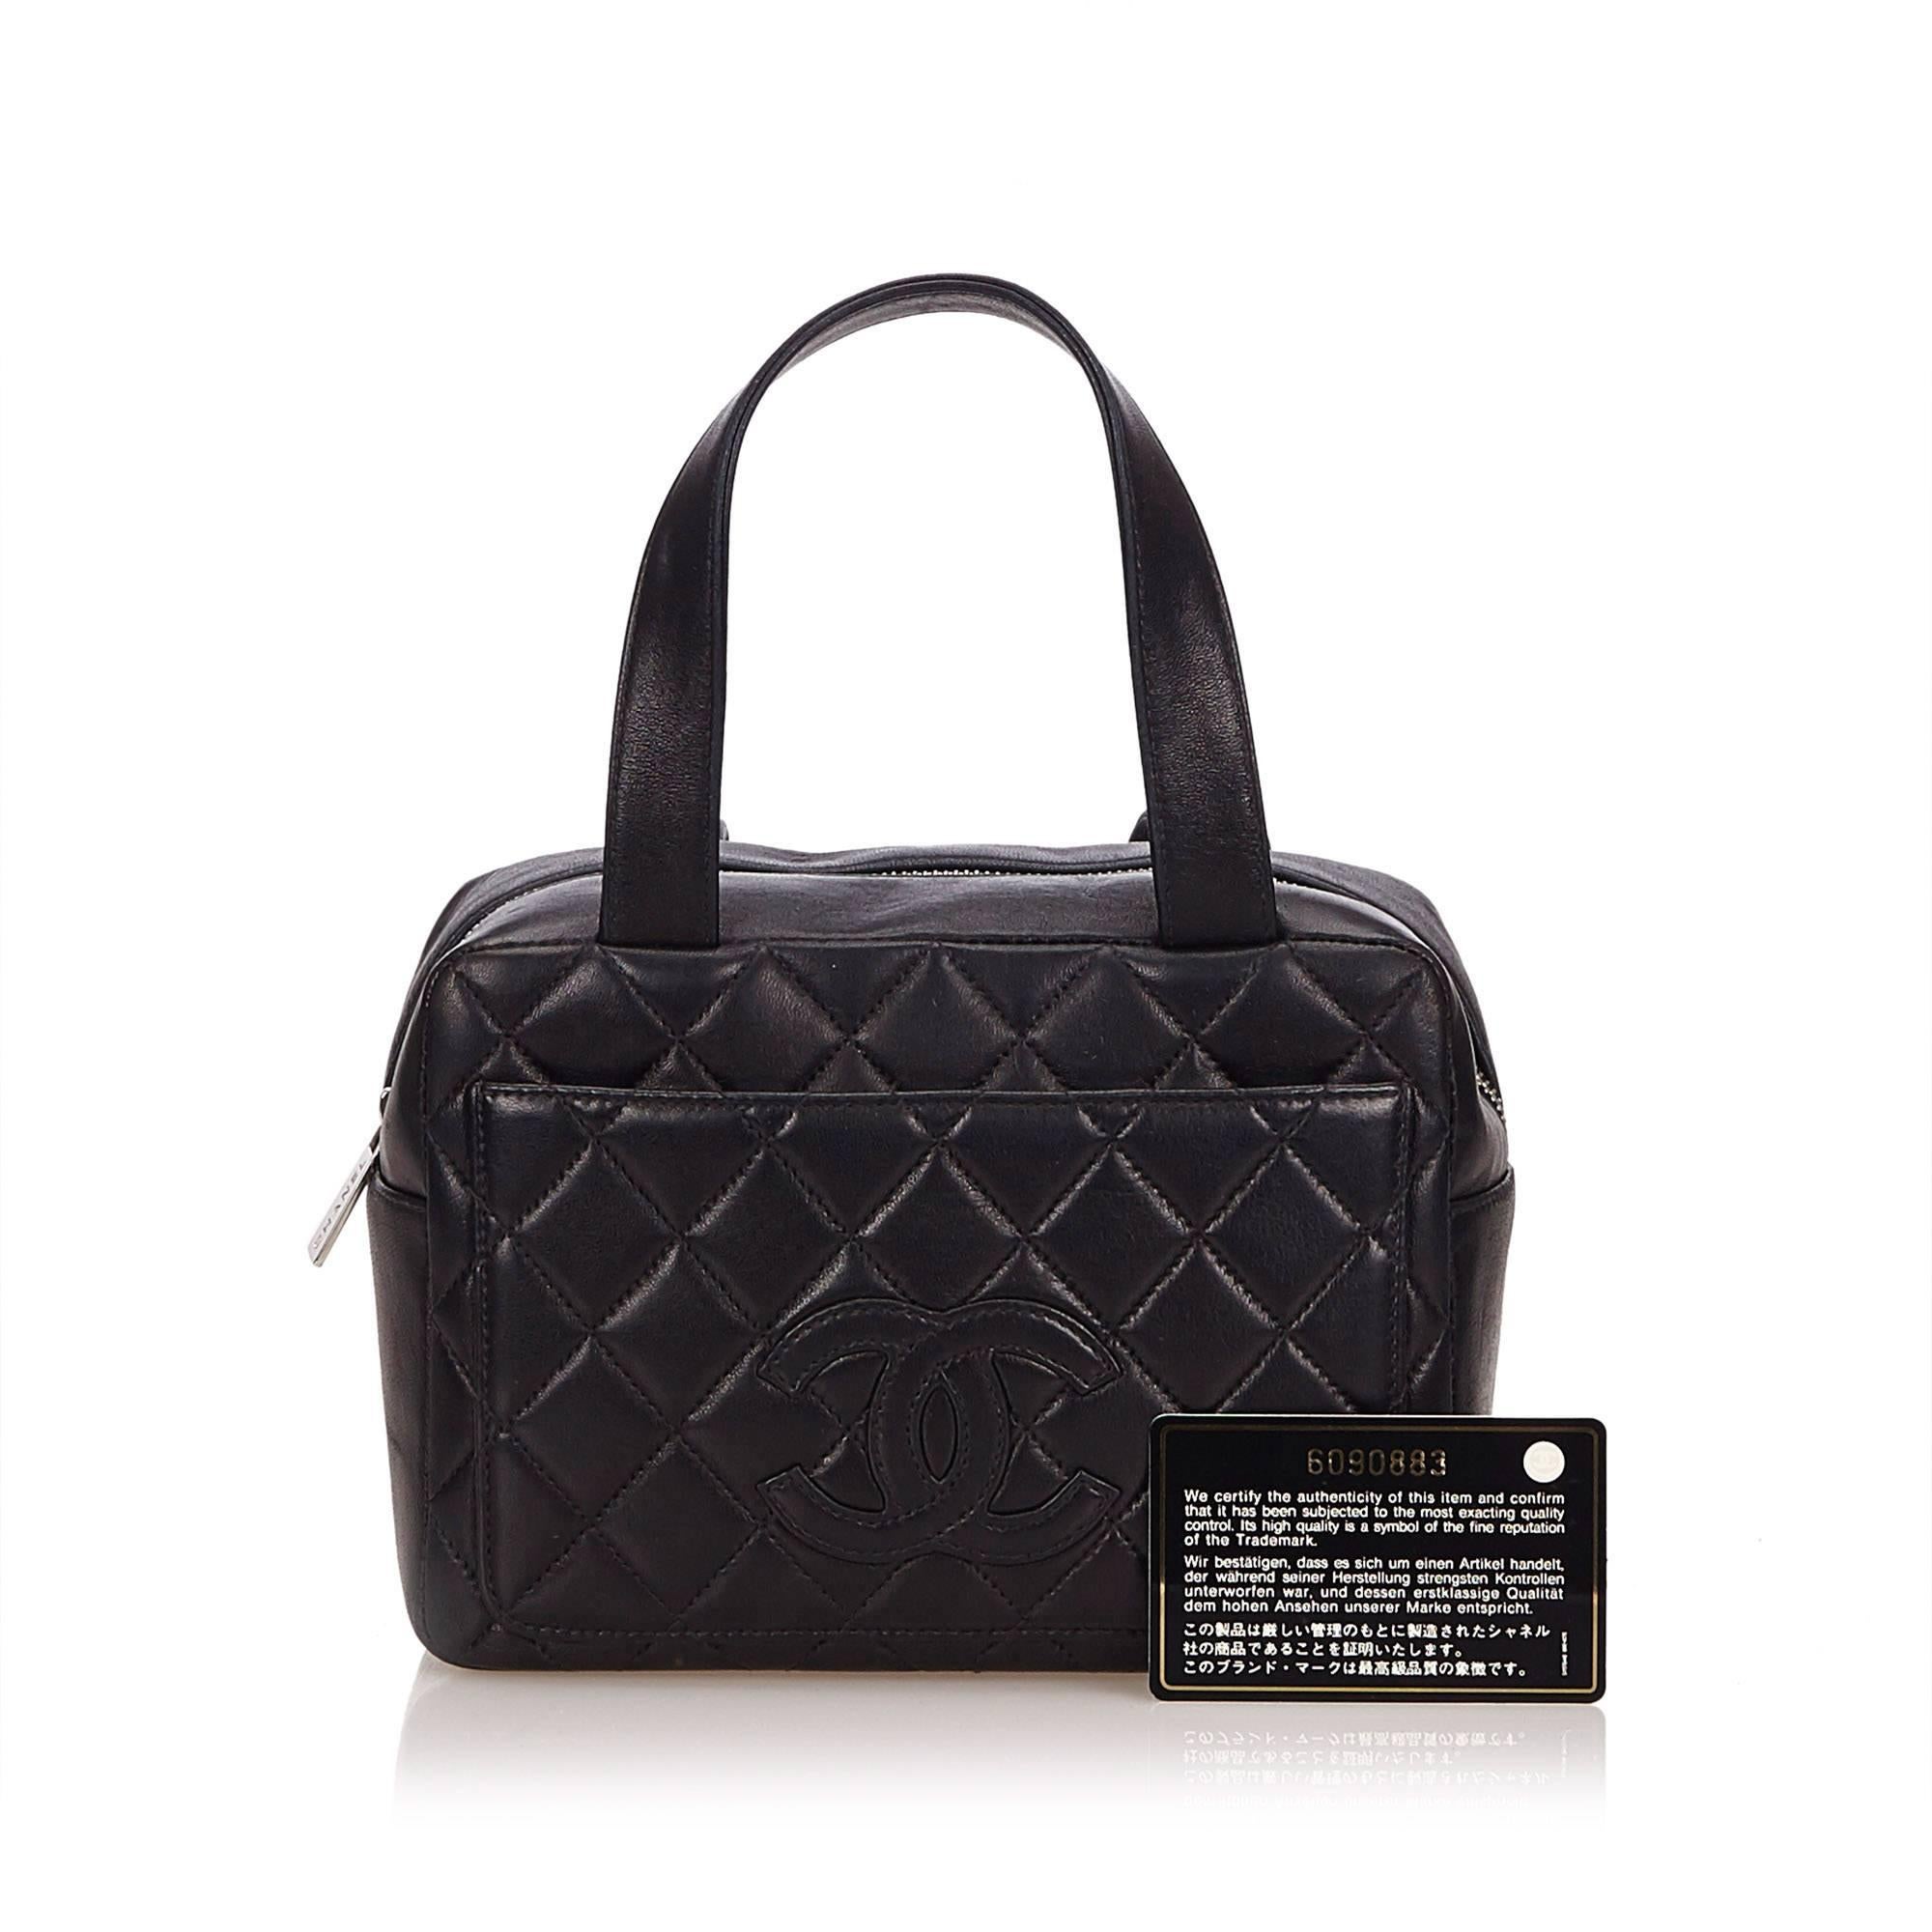 Chanel Black Matelasse Lambskin Leather Handbag For Sale 6